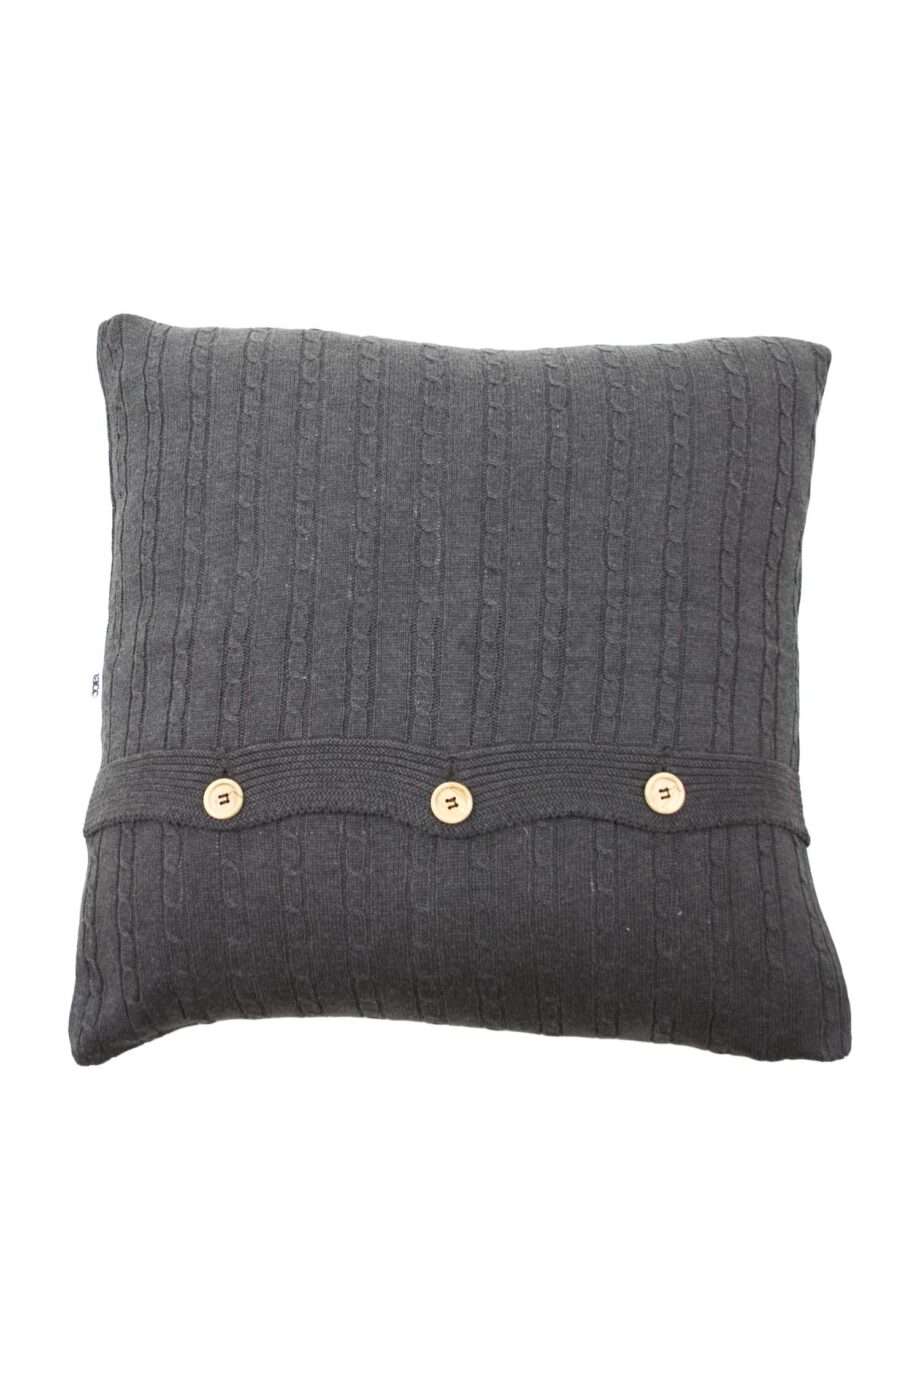 twist small grey knitted cotton pillowcase medium